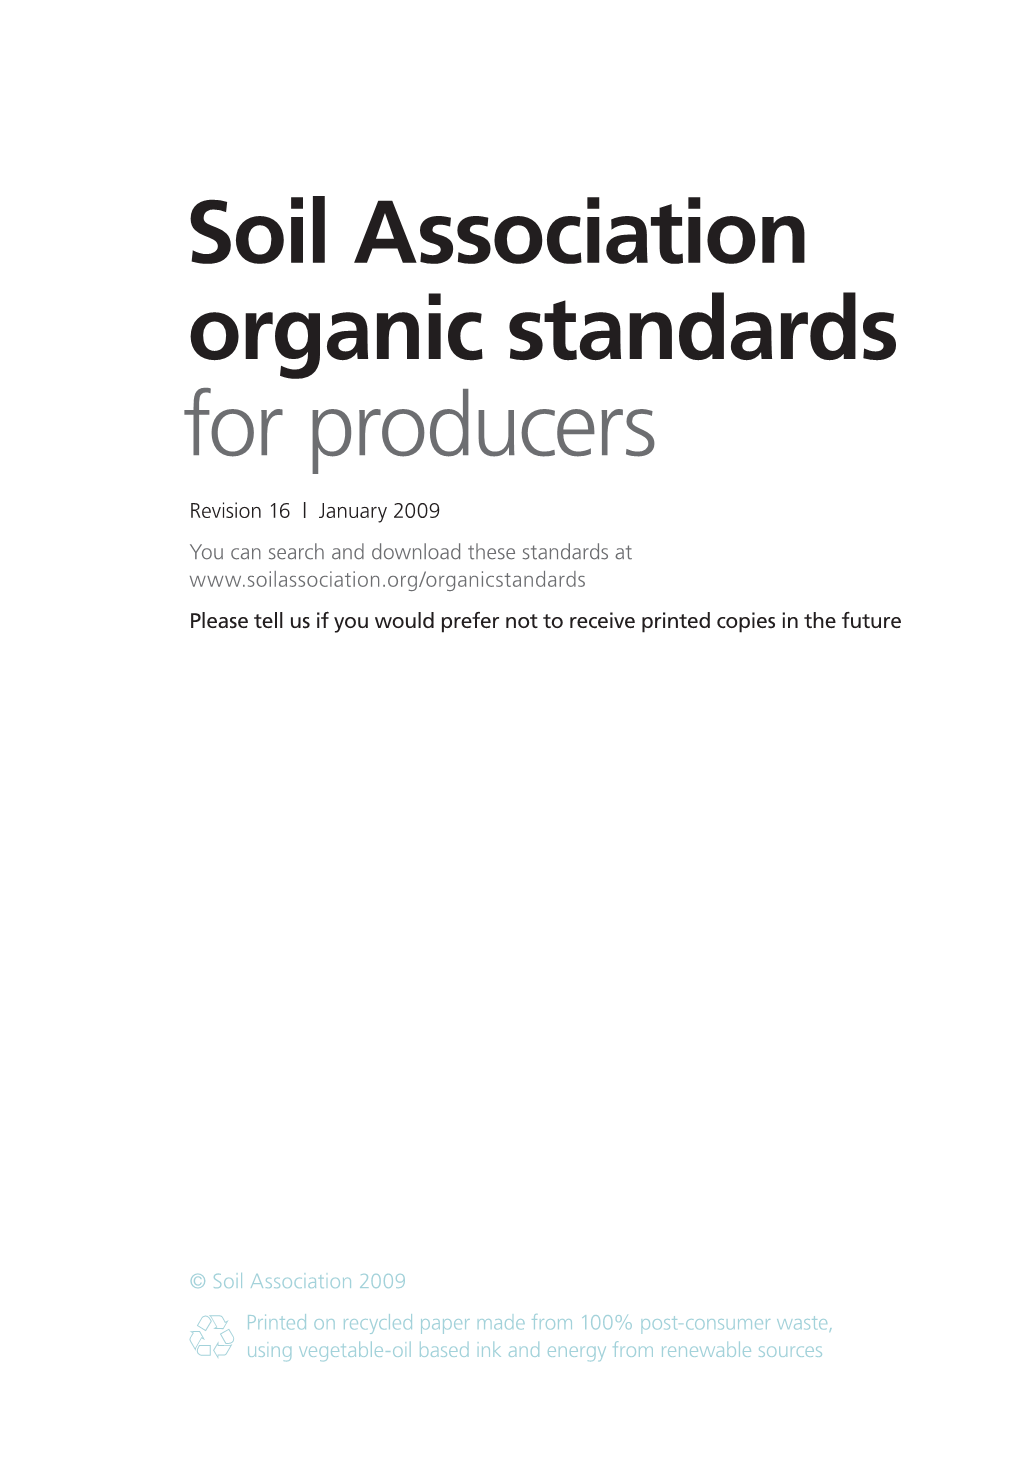 Soil Association Organic Standards for Producers